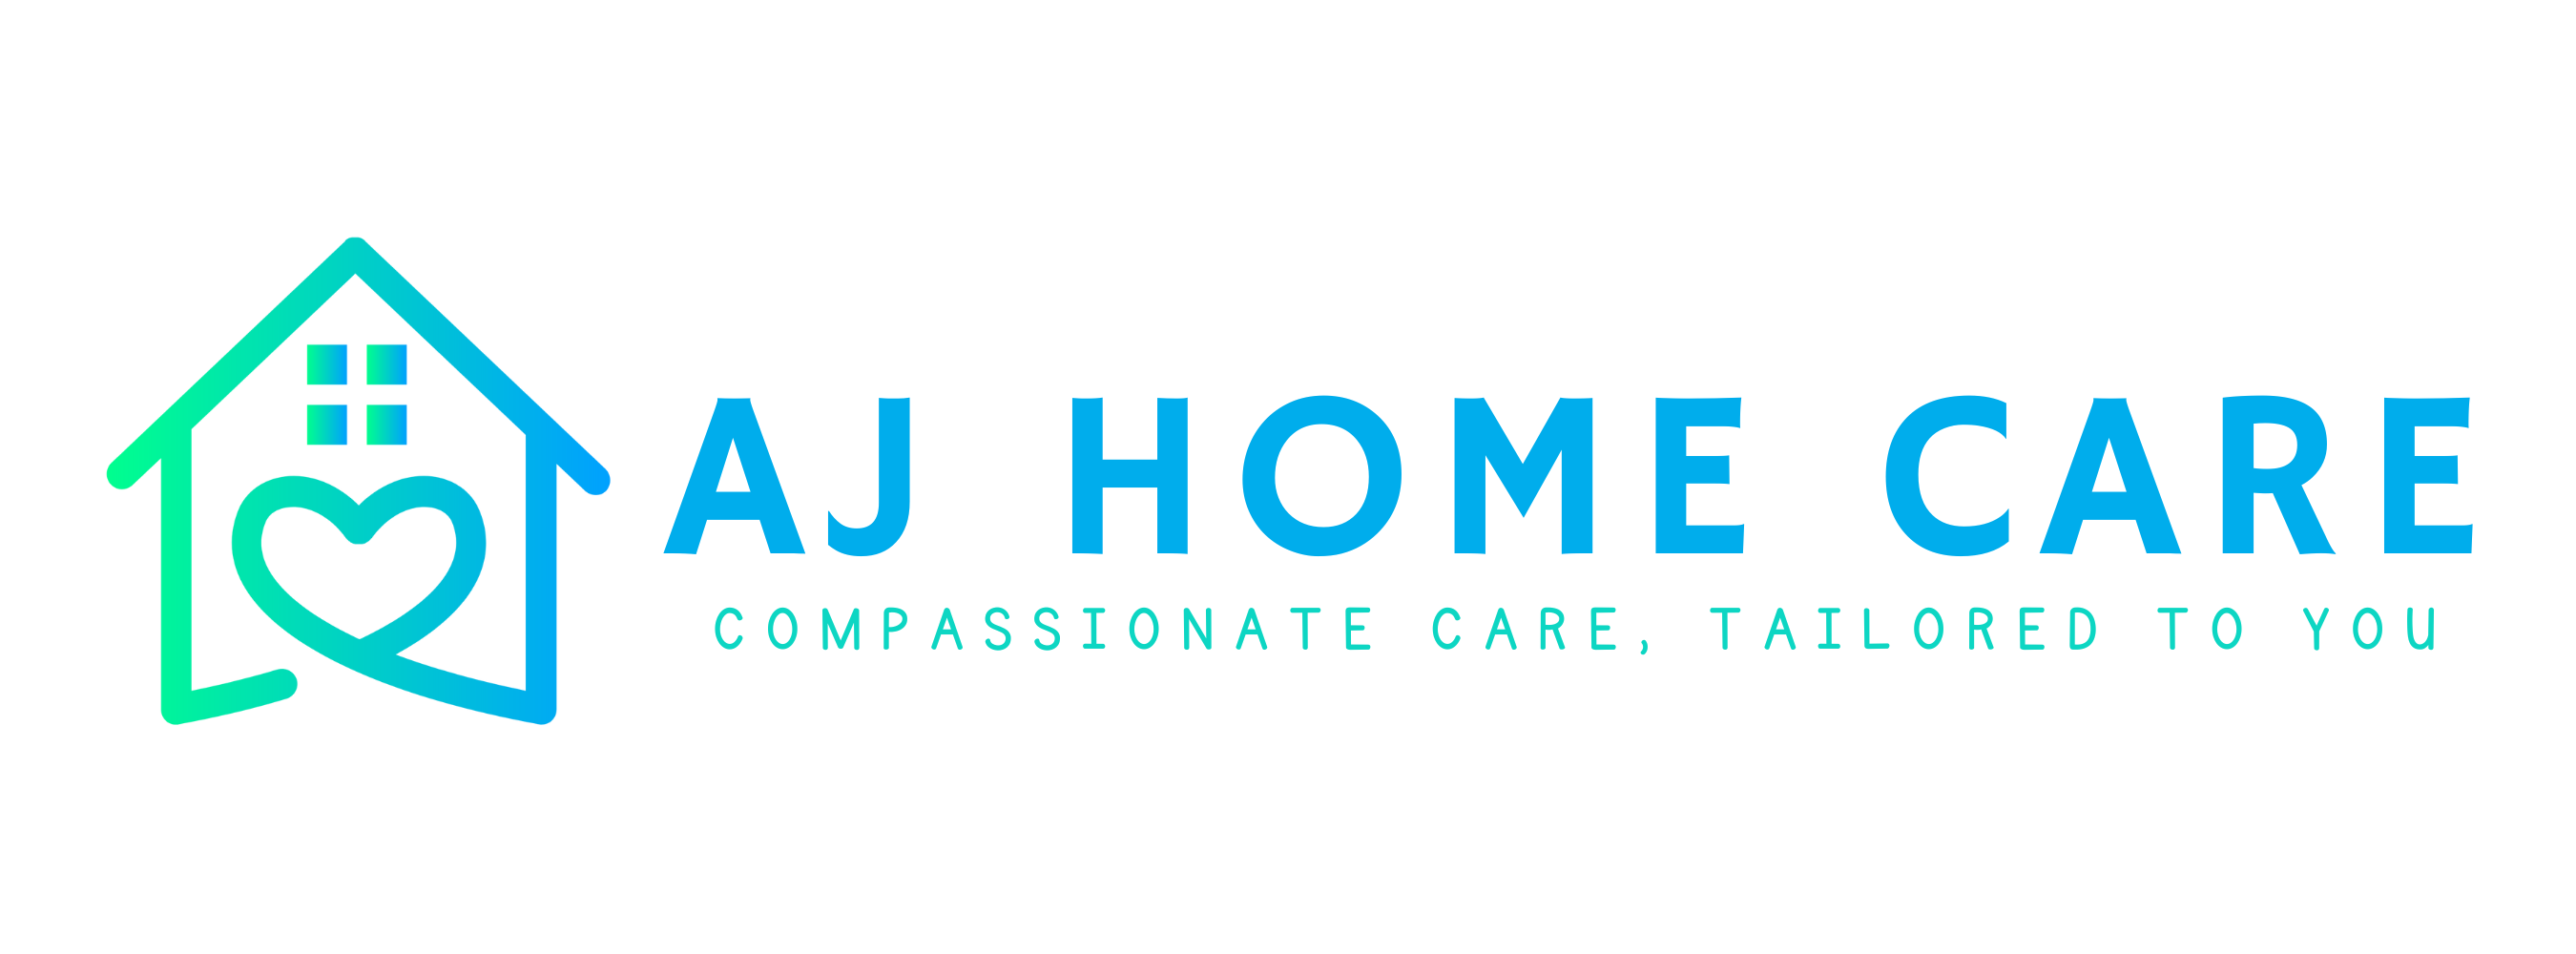 AJ-HOME-CARE-COMPASSIONATE-CARE-TAILORED-TO-YOU